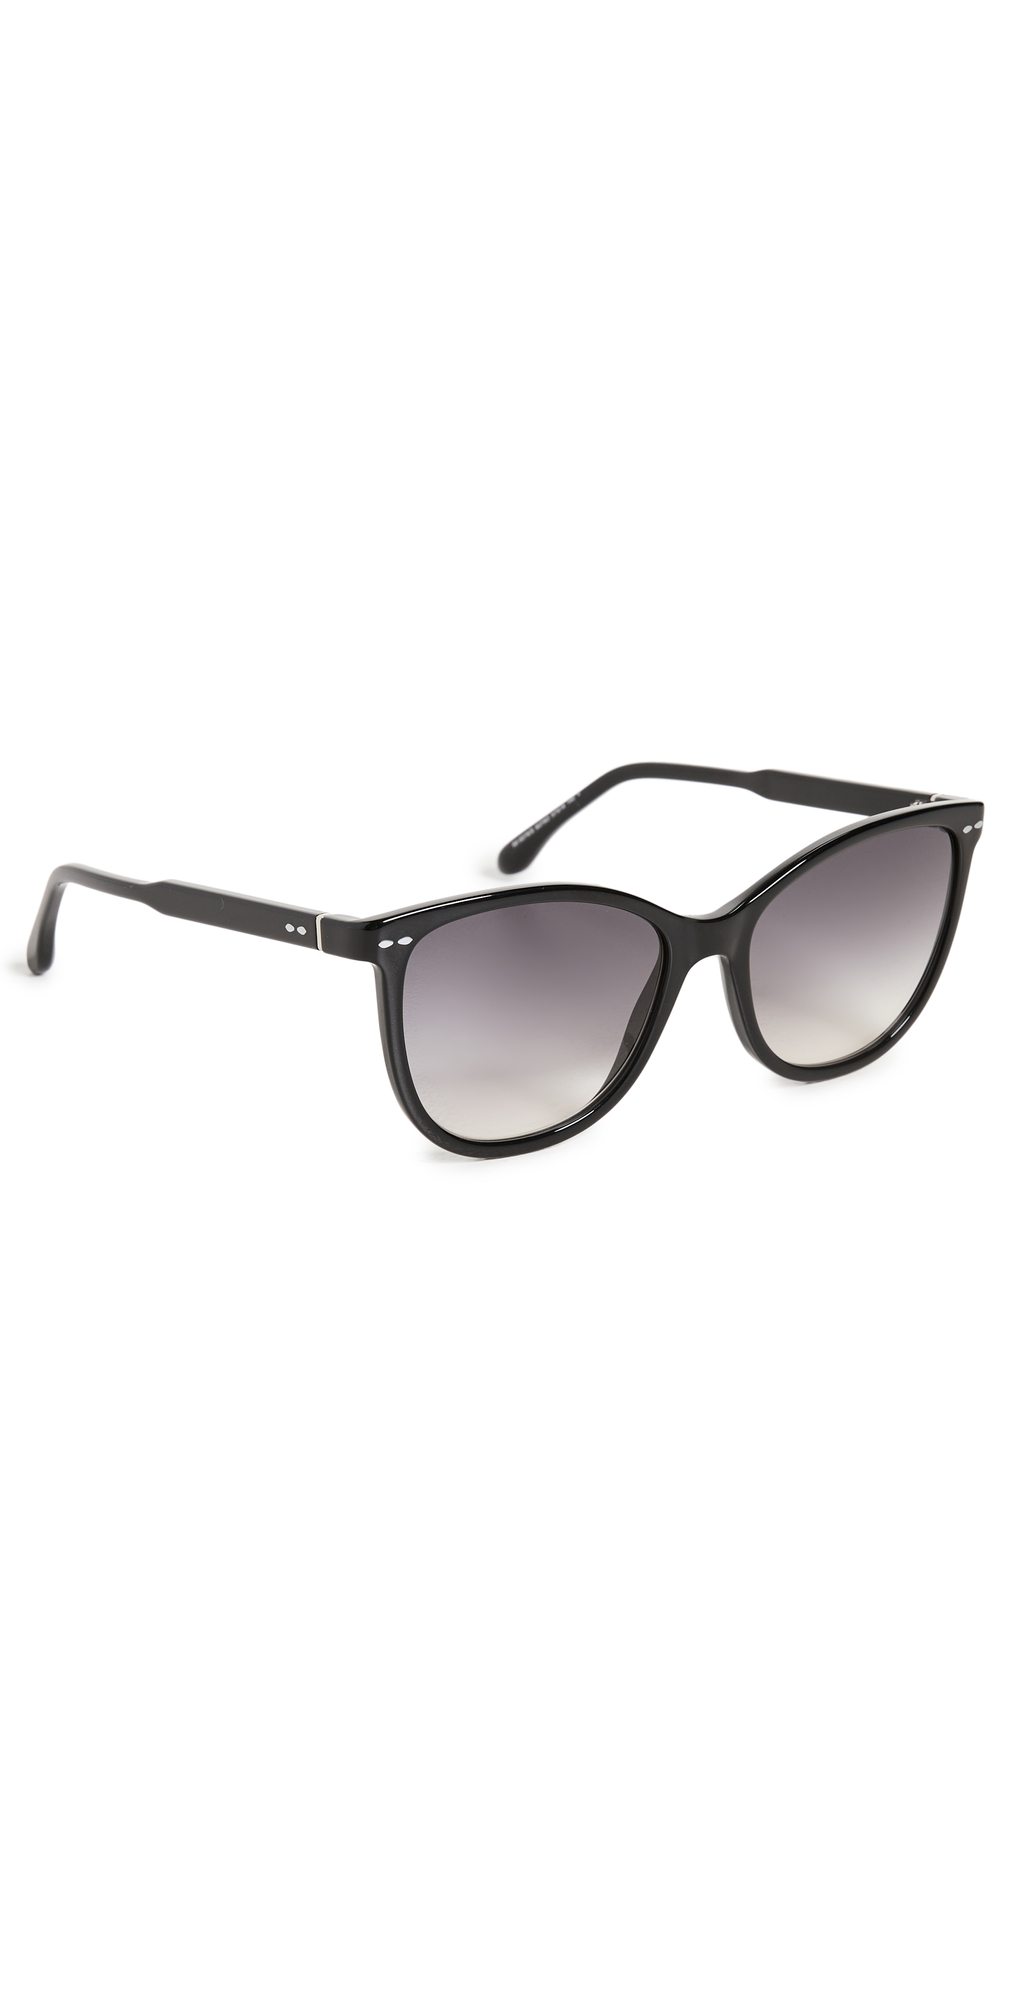 Isabel Marant Rounded Cat Eye Sunglasses in black